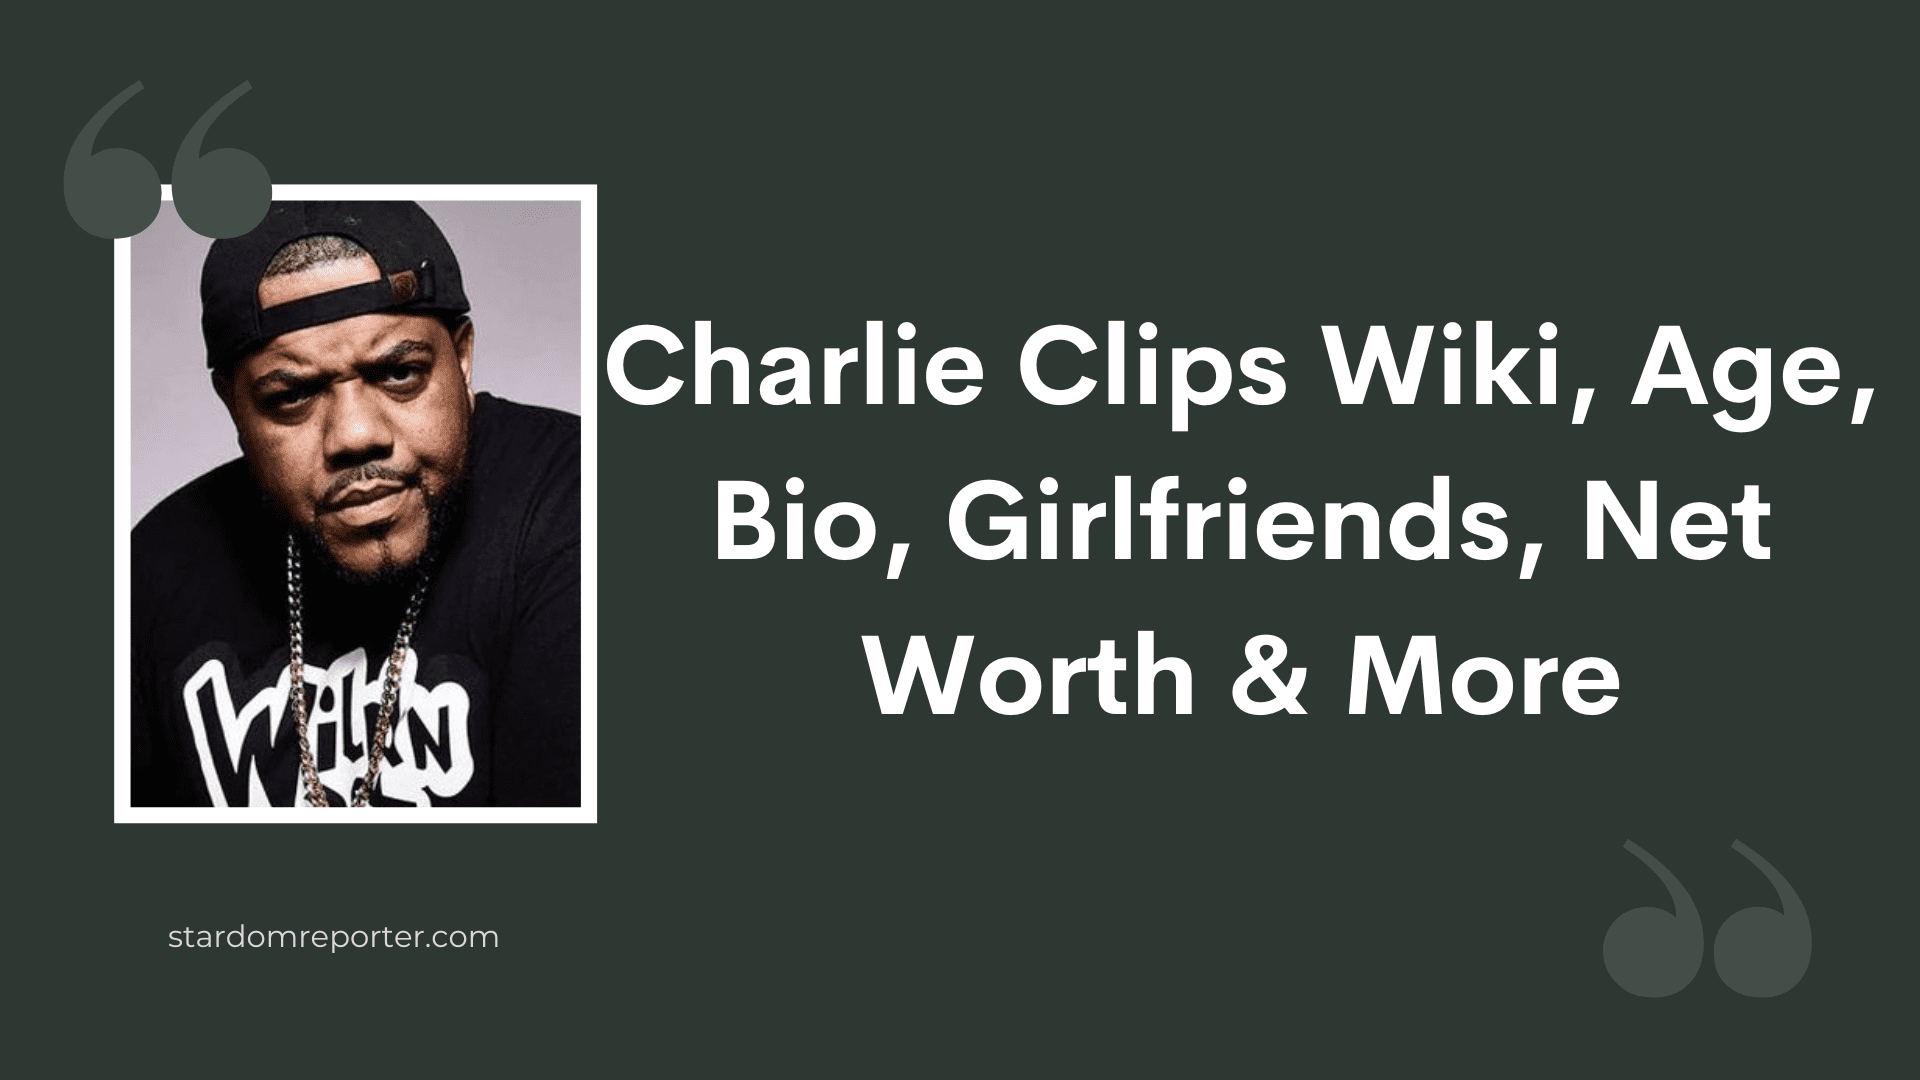 Charlie Clips Wiki, Age, Bio, Girlfriends, Net Worth & More - 29